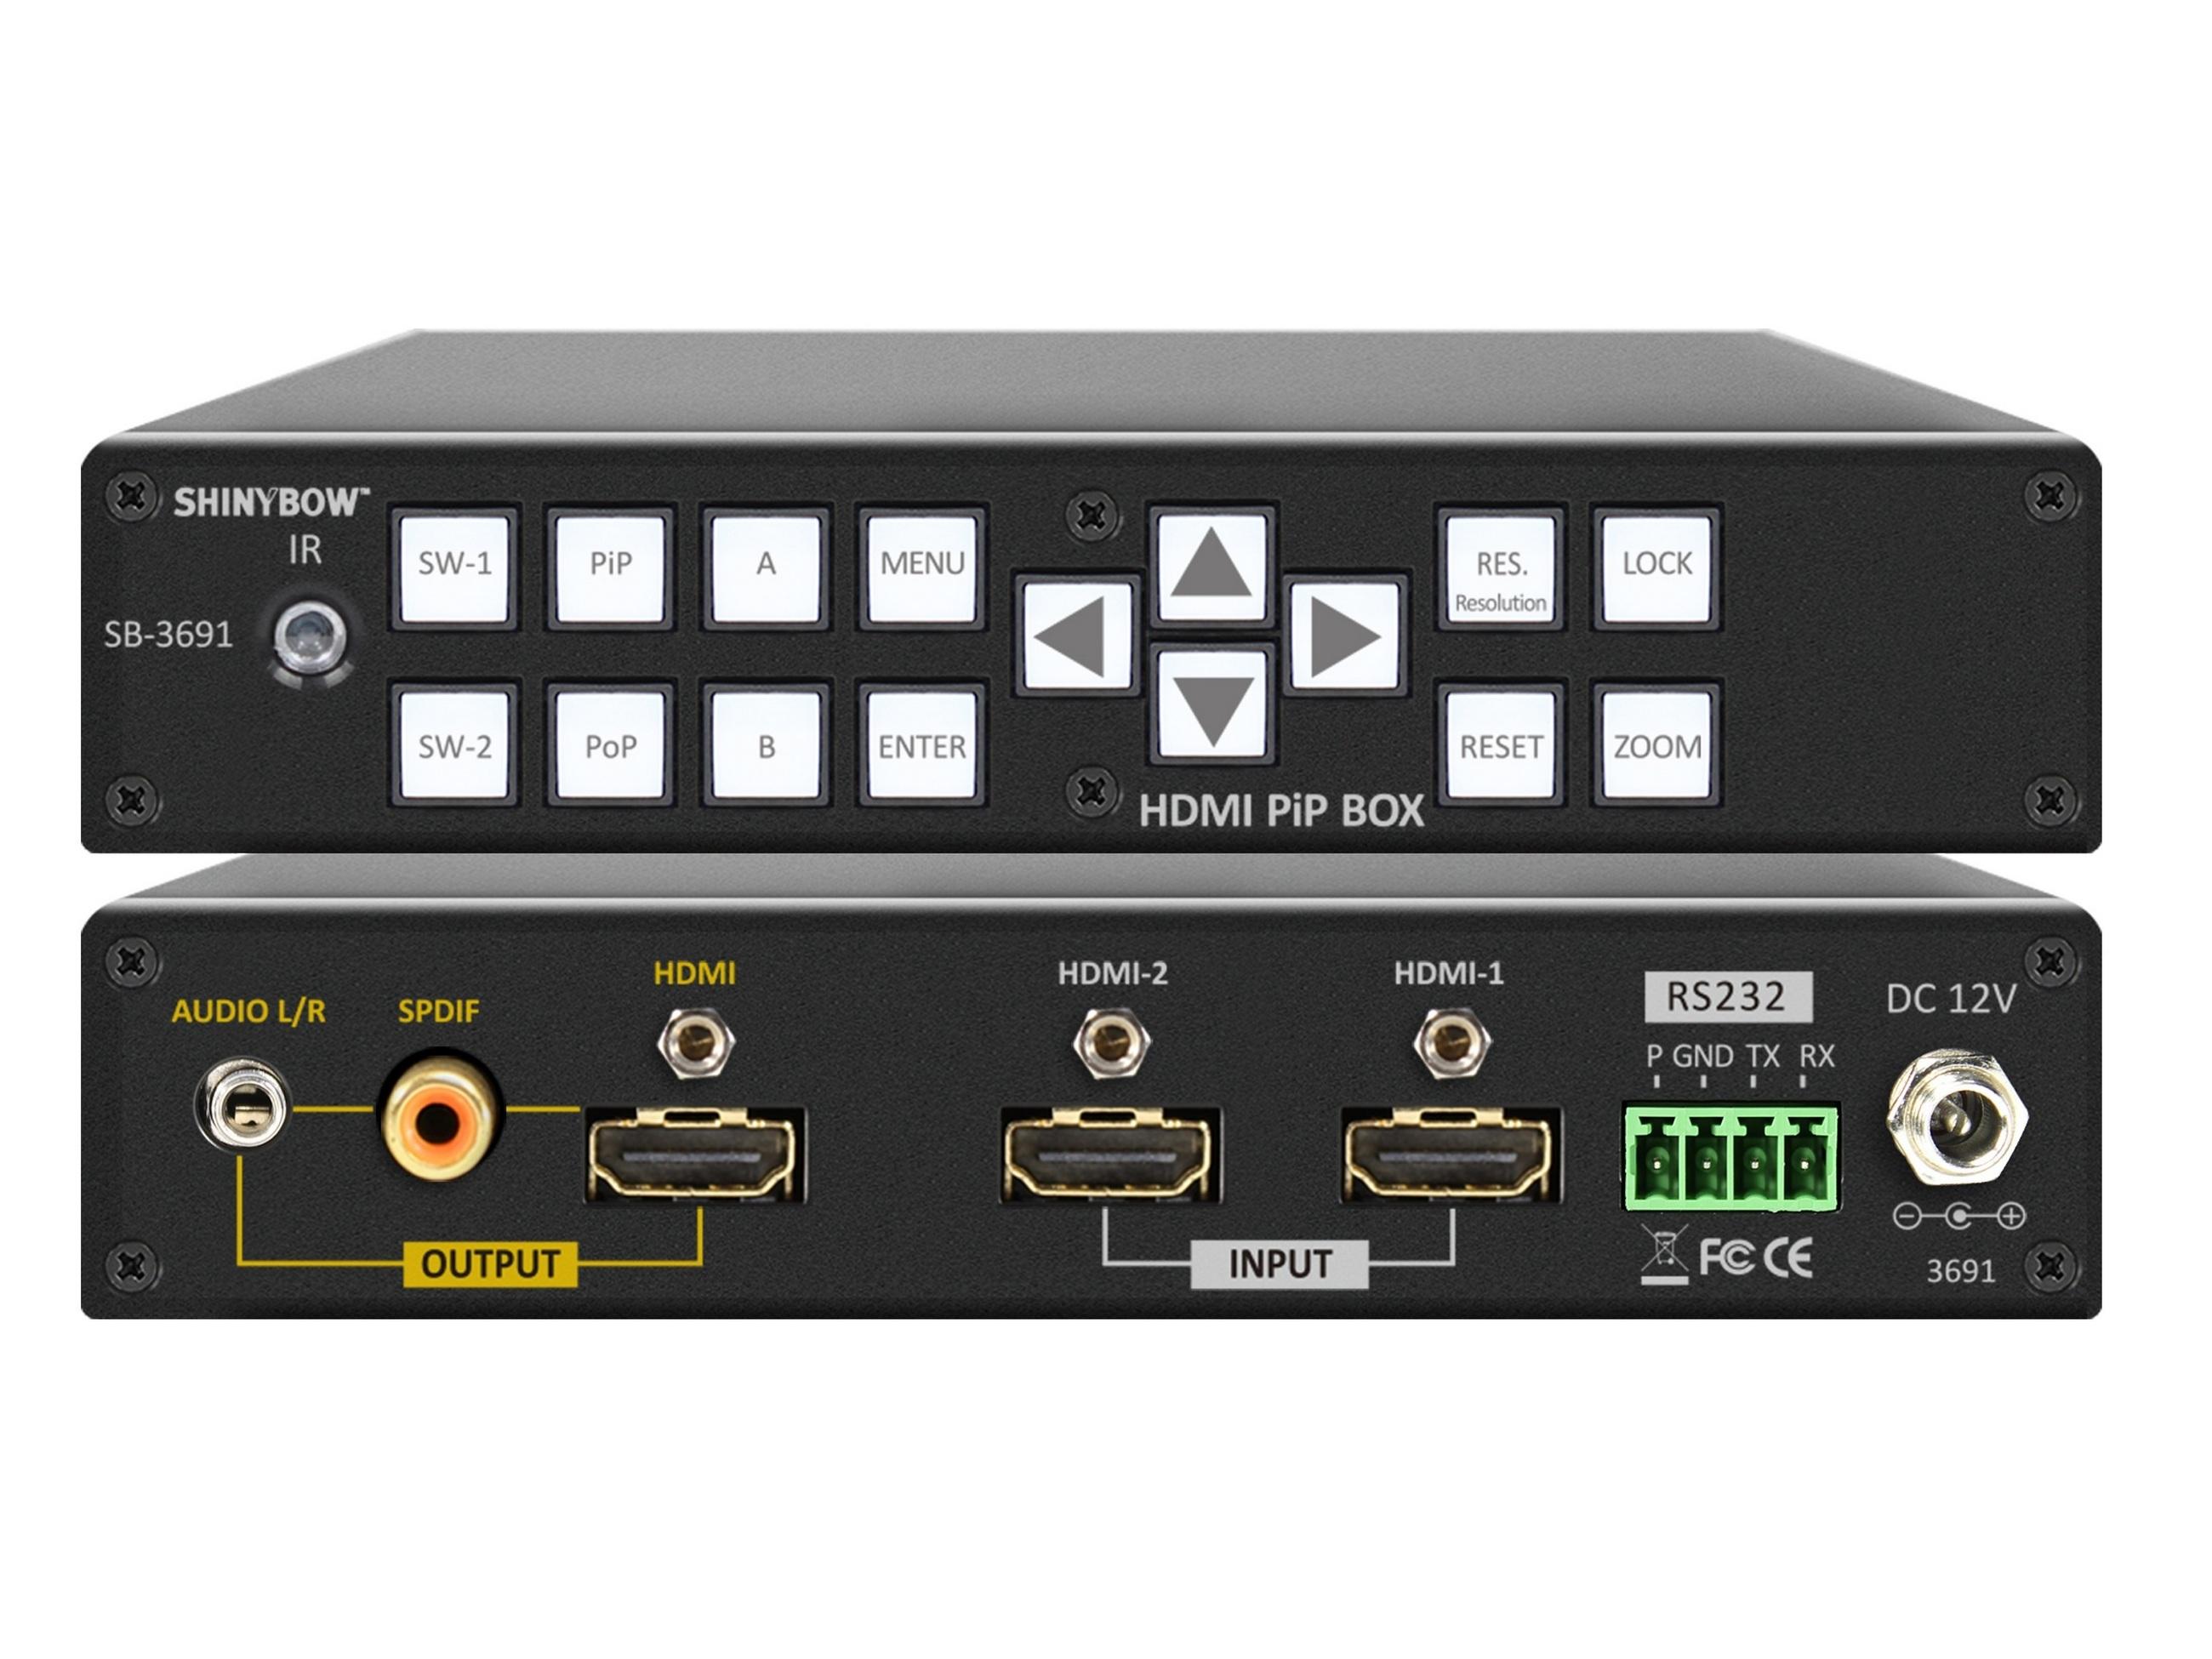 SB-3691-b 2x1 HDMI PiP/PoP Selector Switch Scaler by Shinybow